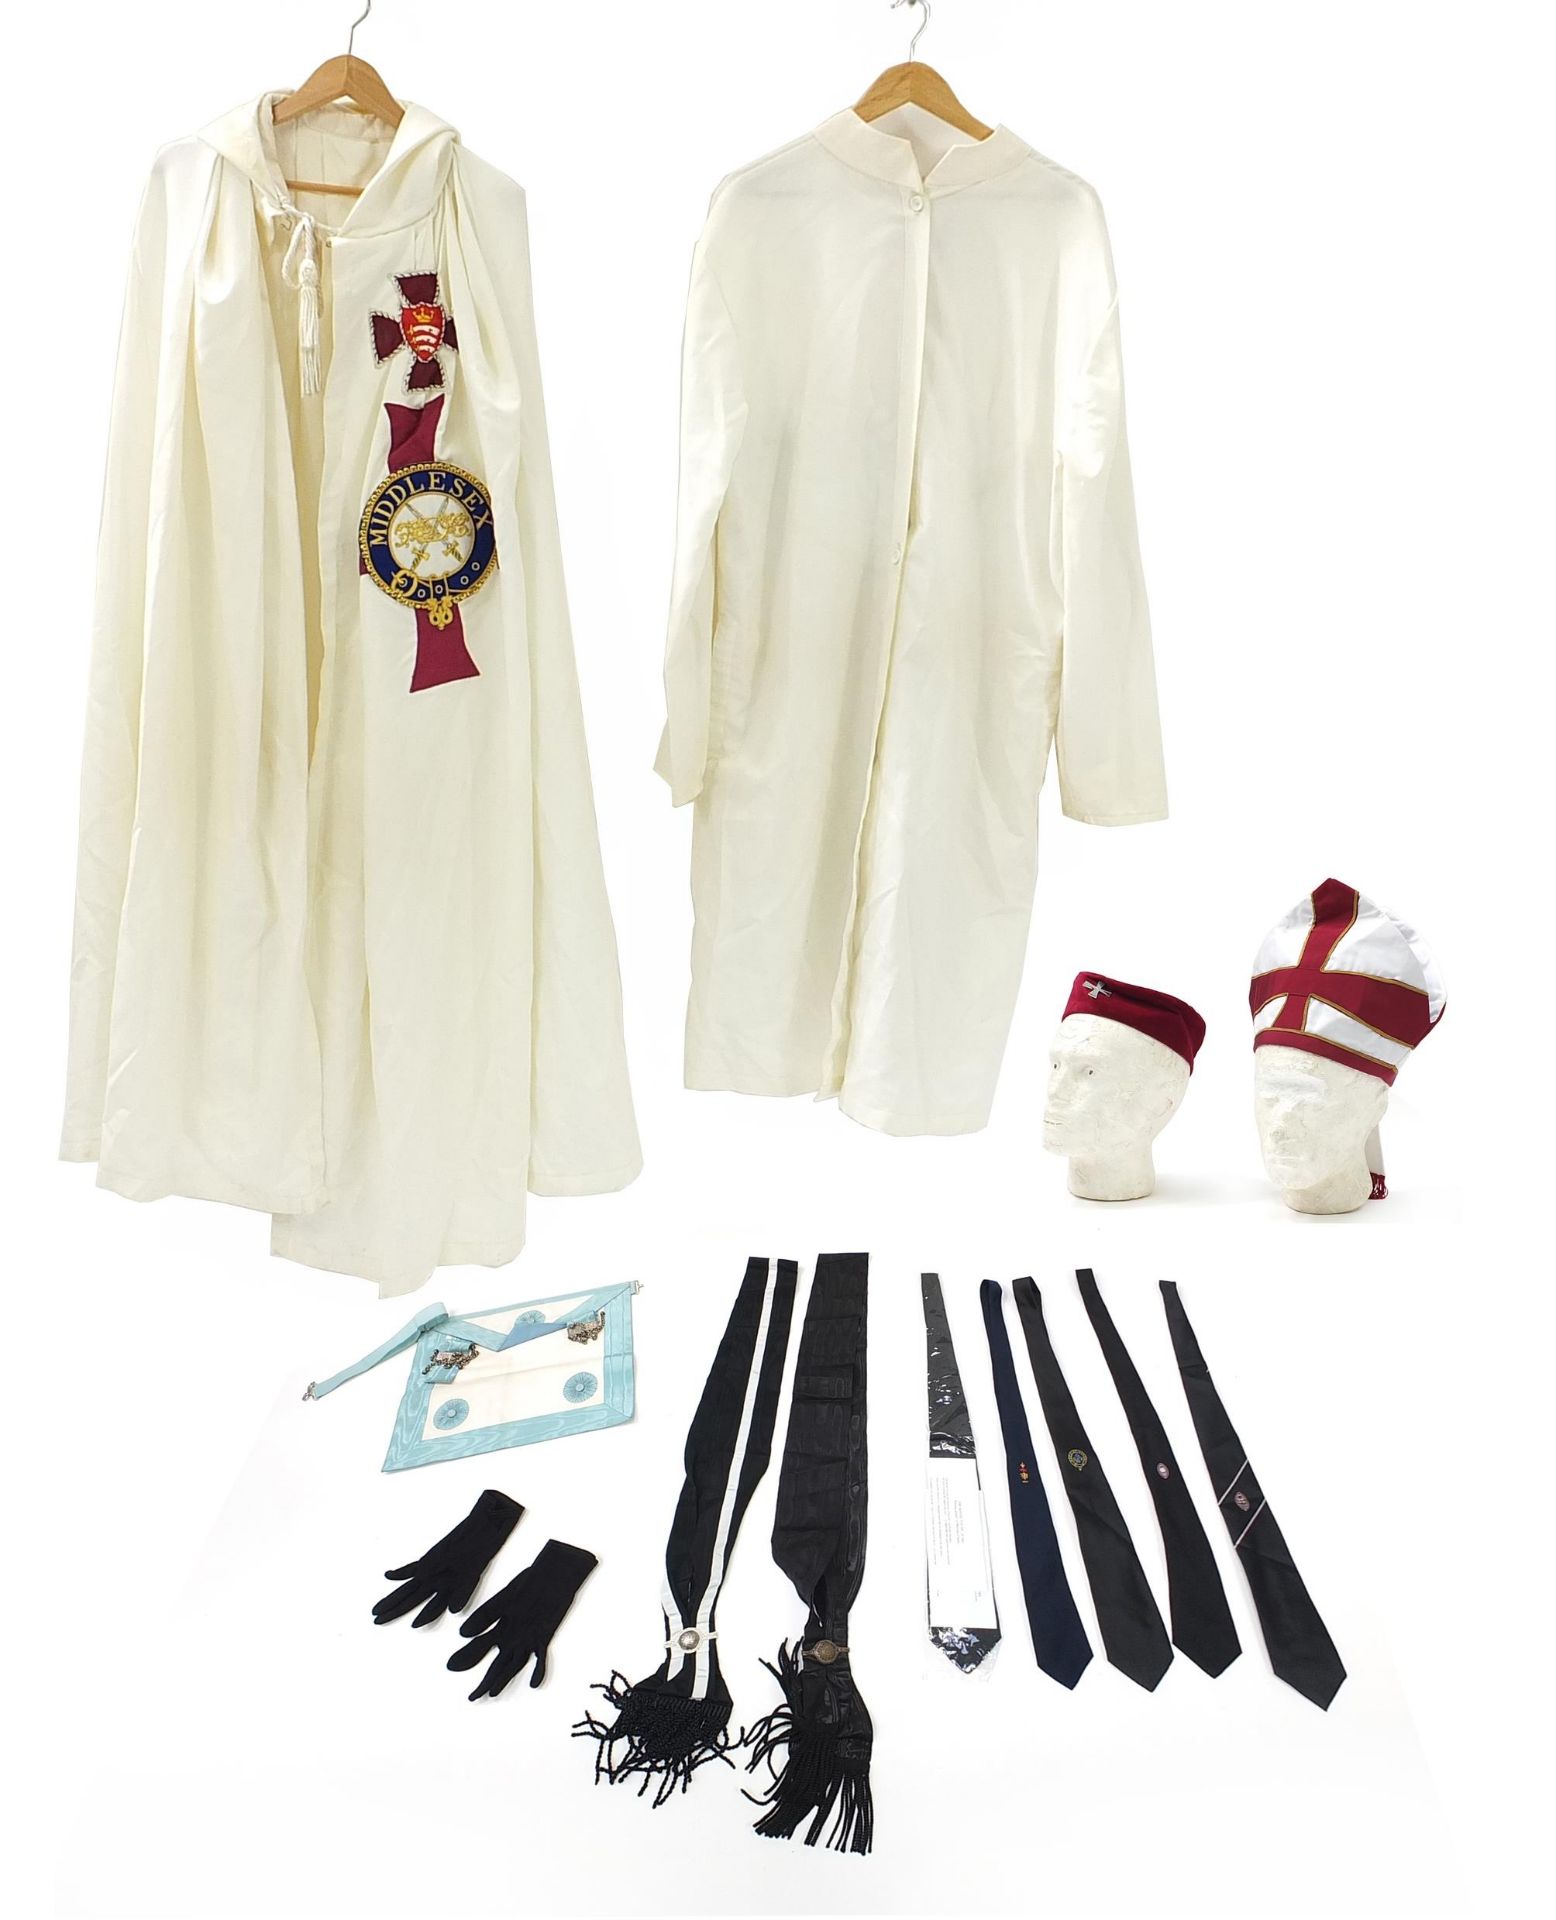 Masonic regalia including Templar Cross cloak, sashes and leather belt